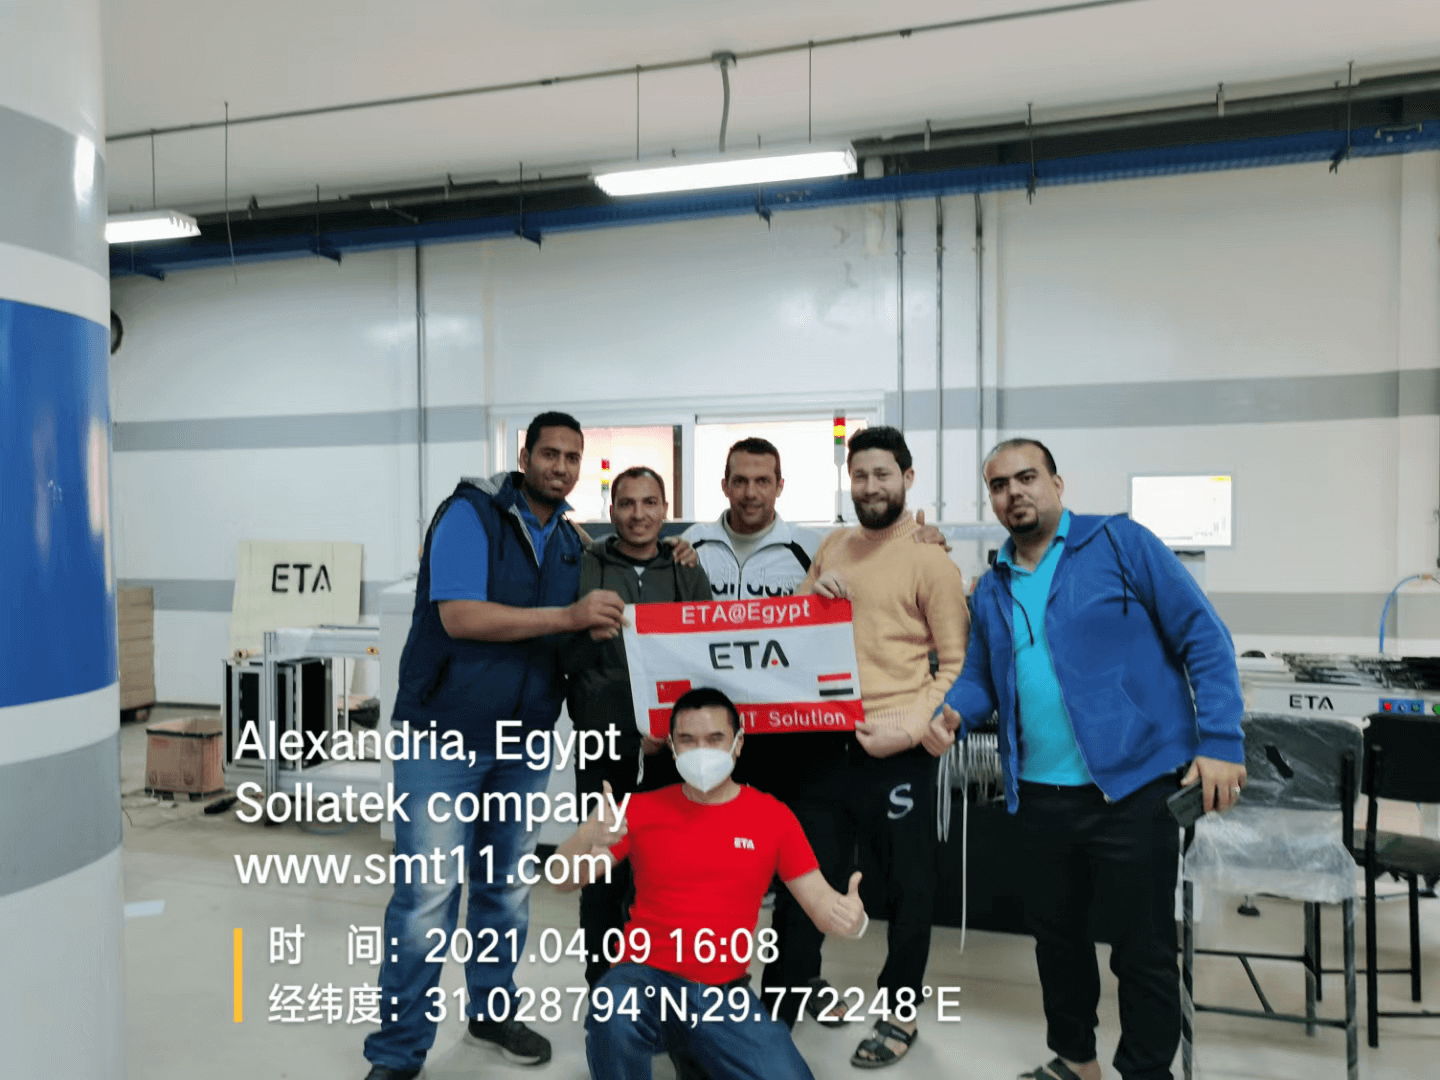 7 ETA Global Service i Egypten